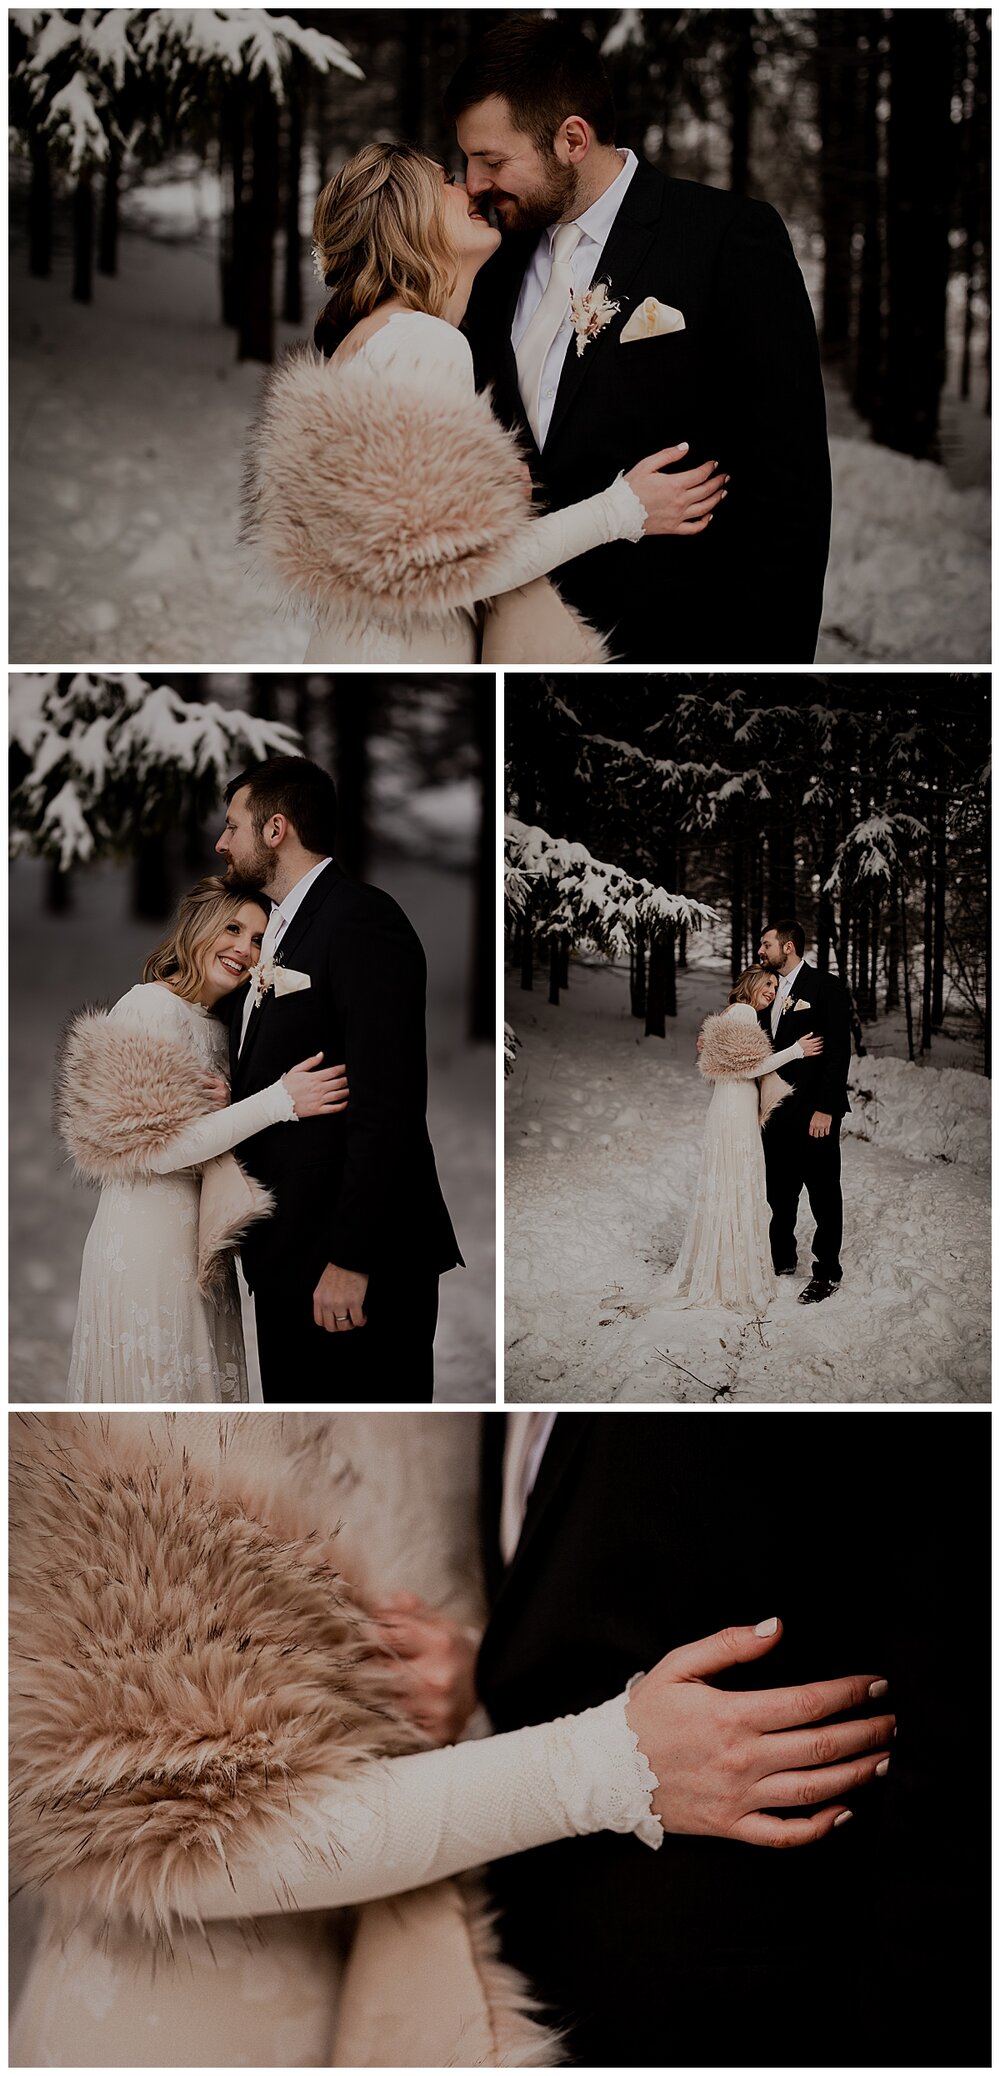 MILWAUKEE WEDDING PHOTOGRAPHER - GLACIER HILLS PARK WEDDING PHOTOS 12.jpg